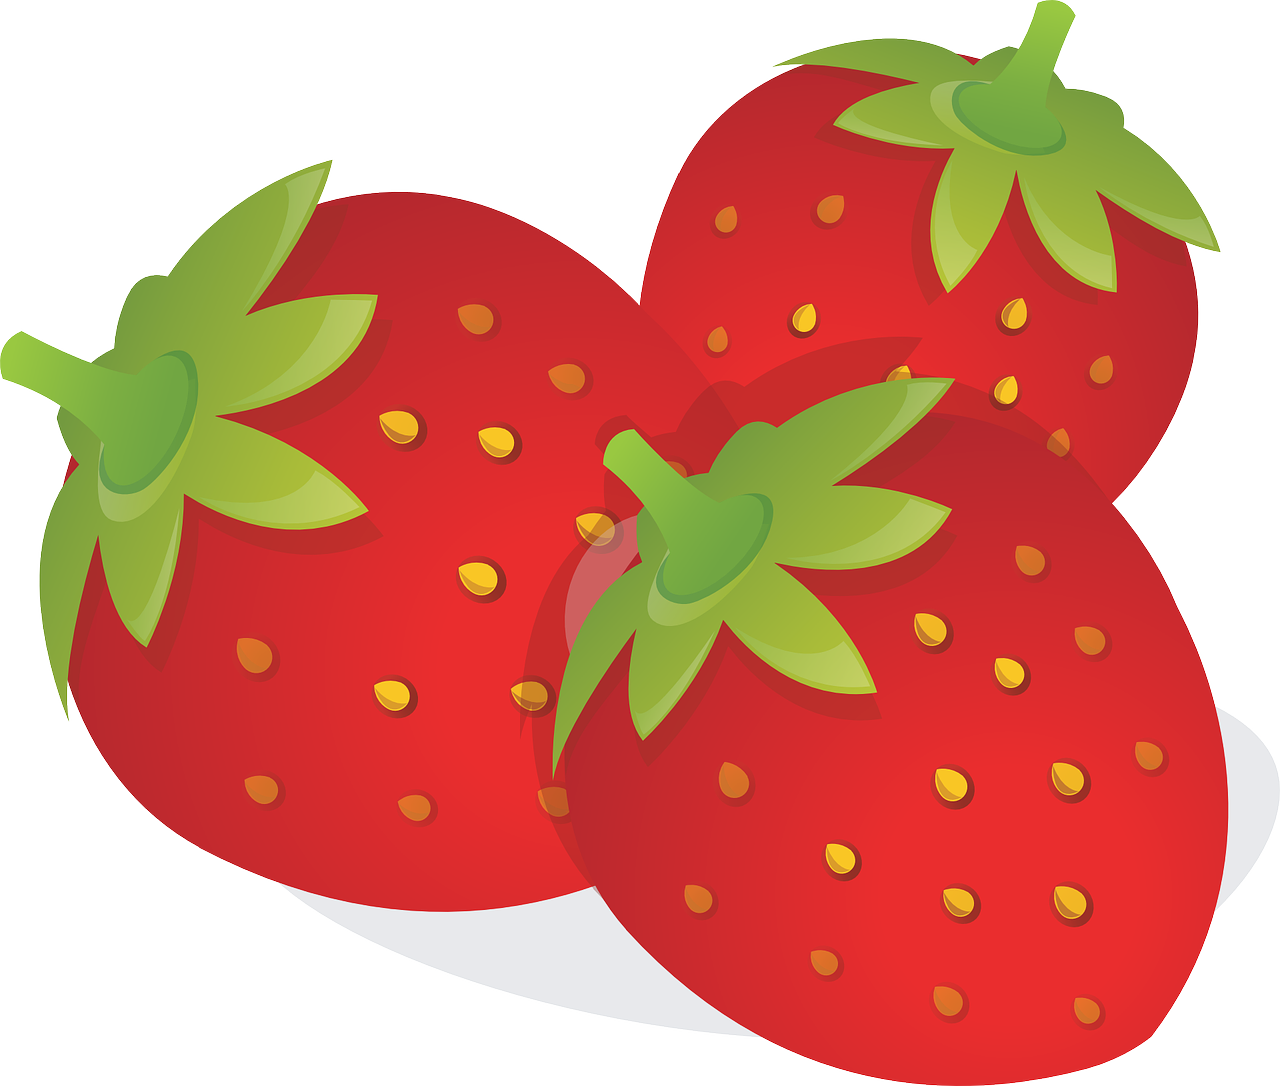 strawberries clipart ripe